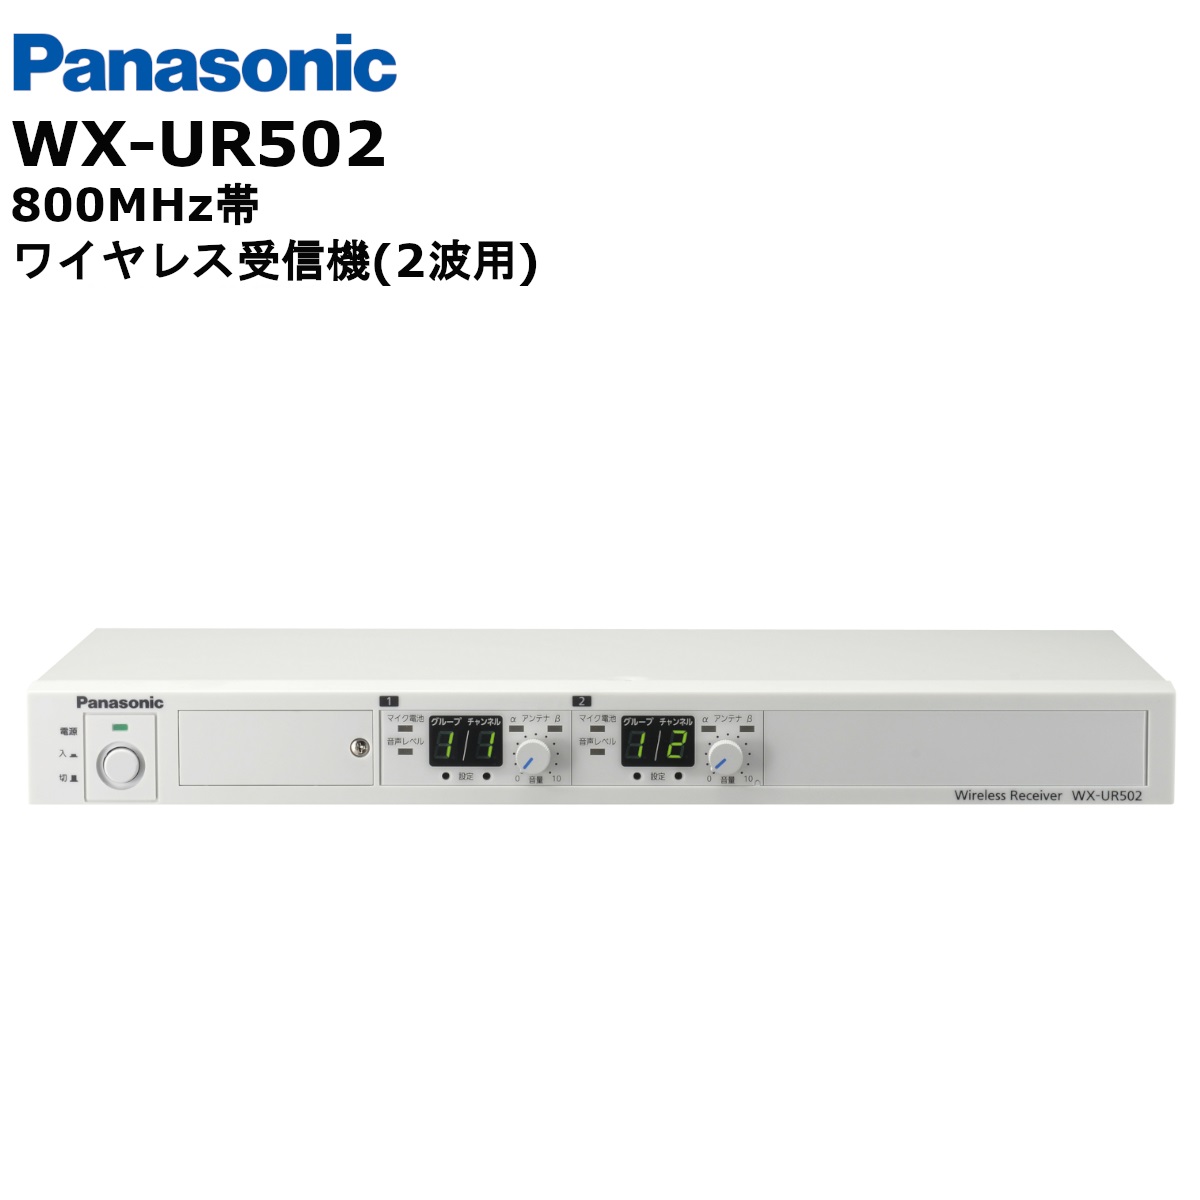 WX-UR502 パナソニック(Panasonic) 800MHz帯ワイヤレス受信機 (2波用) WXUR502 | 無線機の田中電気